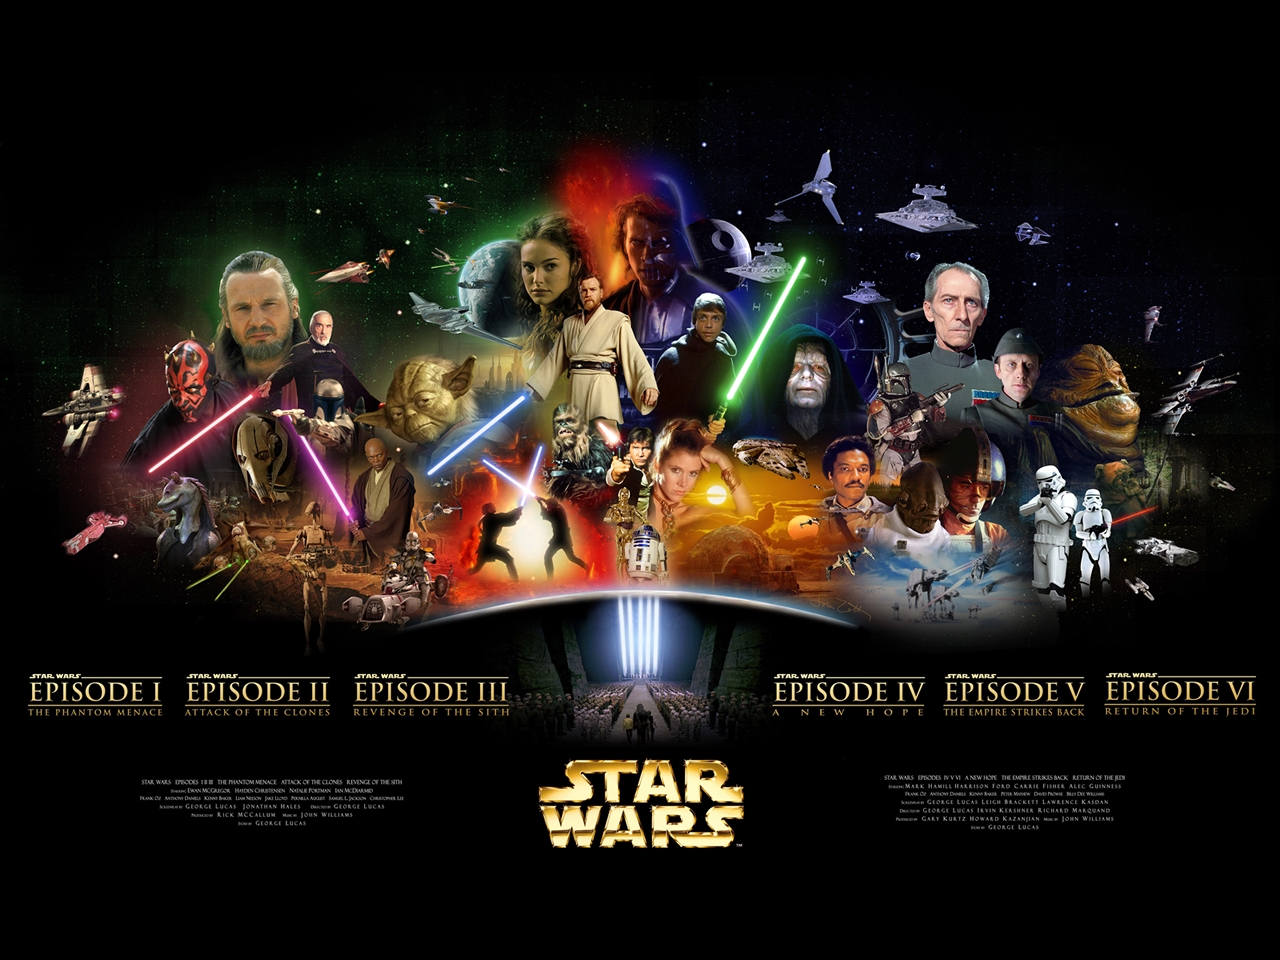 "Star Wars" movie poster desktop wallpaper (1280 x 960 pixels)